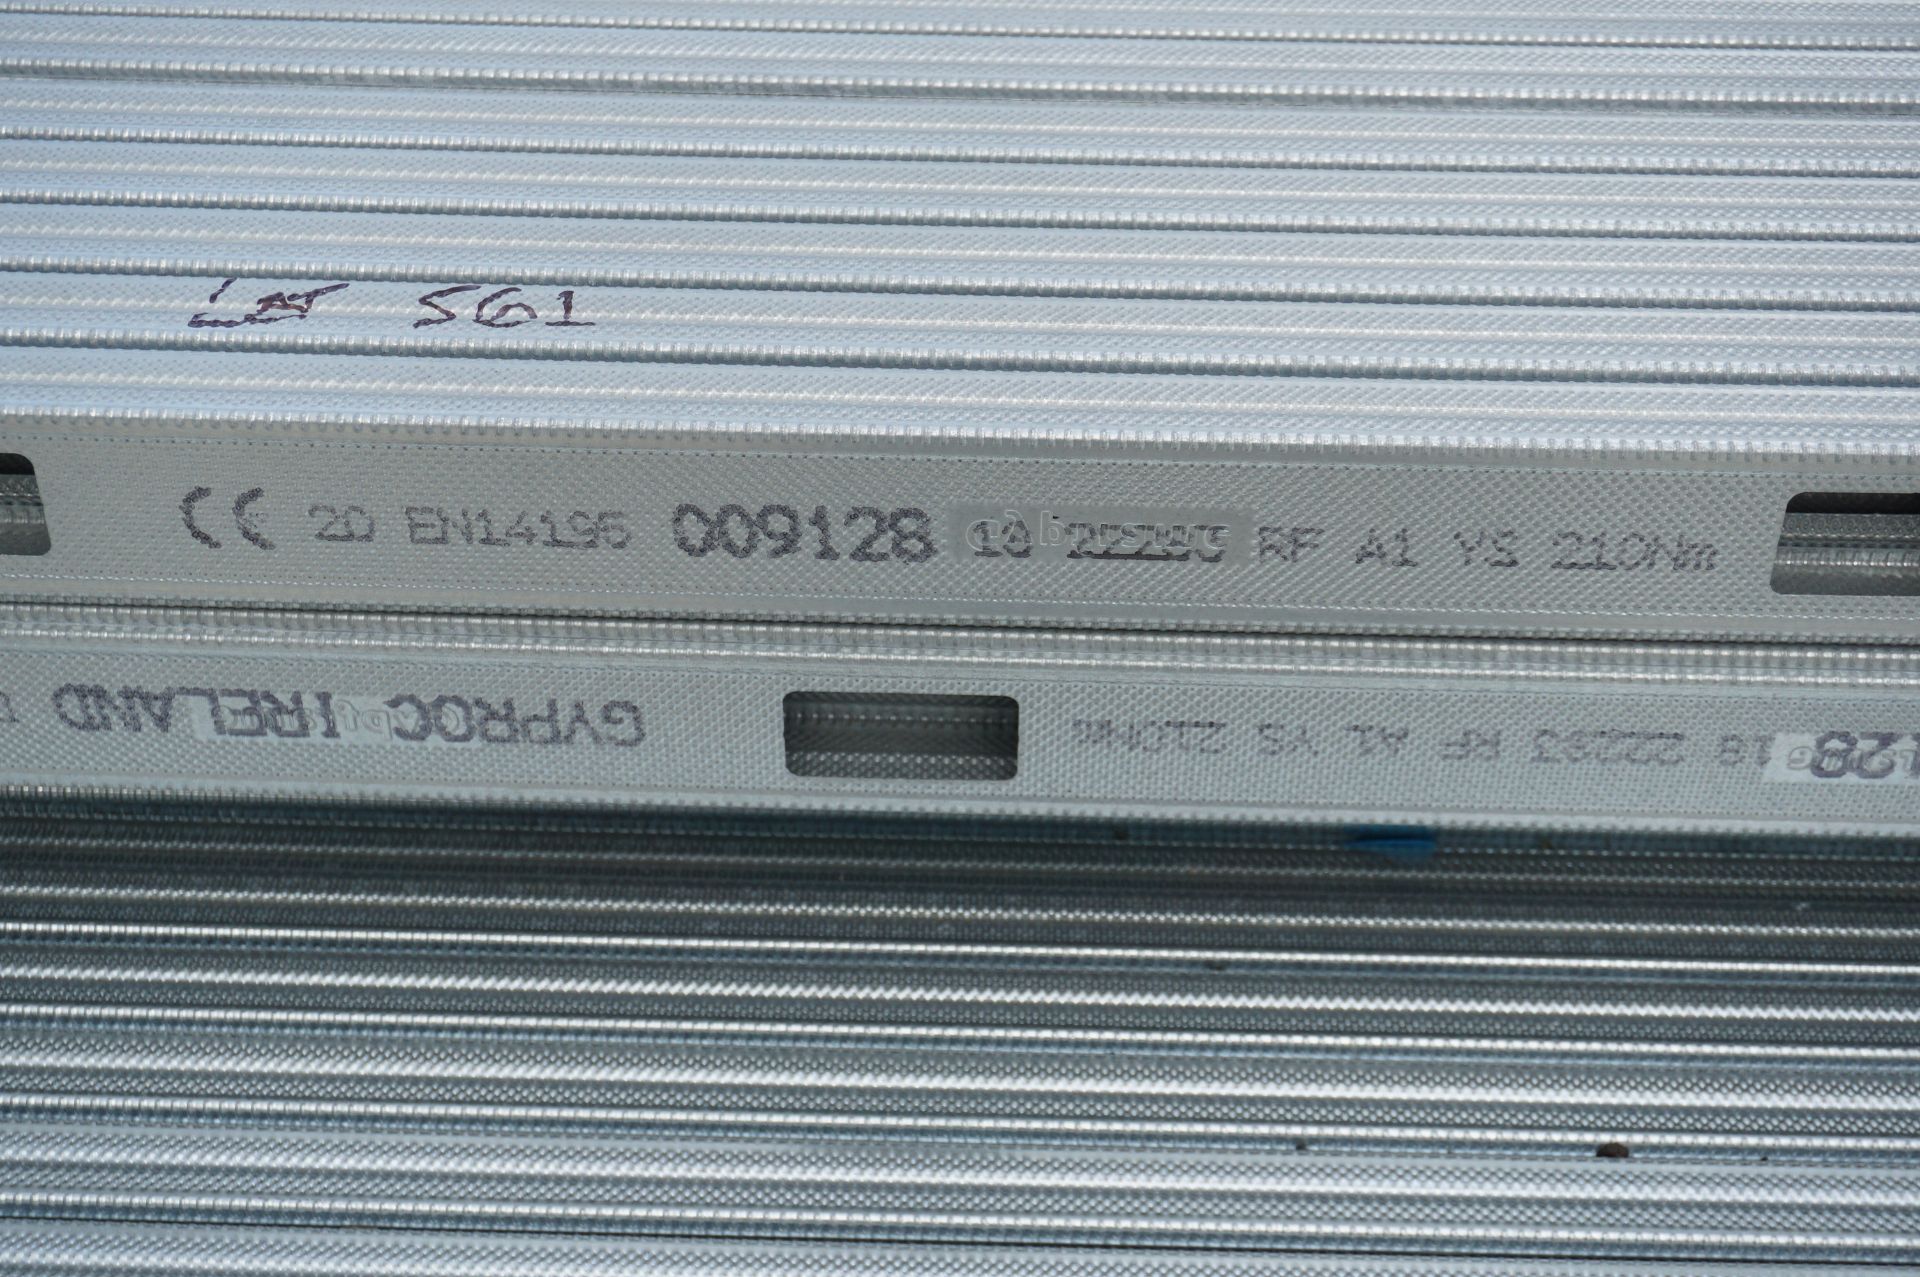 290x (no.) British Gypsum stud, 70S50 Gypframe, x 2700mm - Image 2 of 7